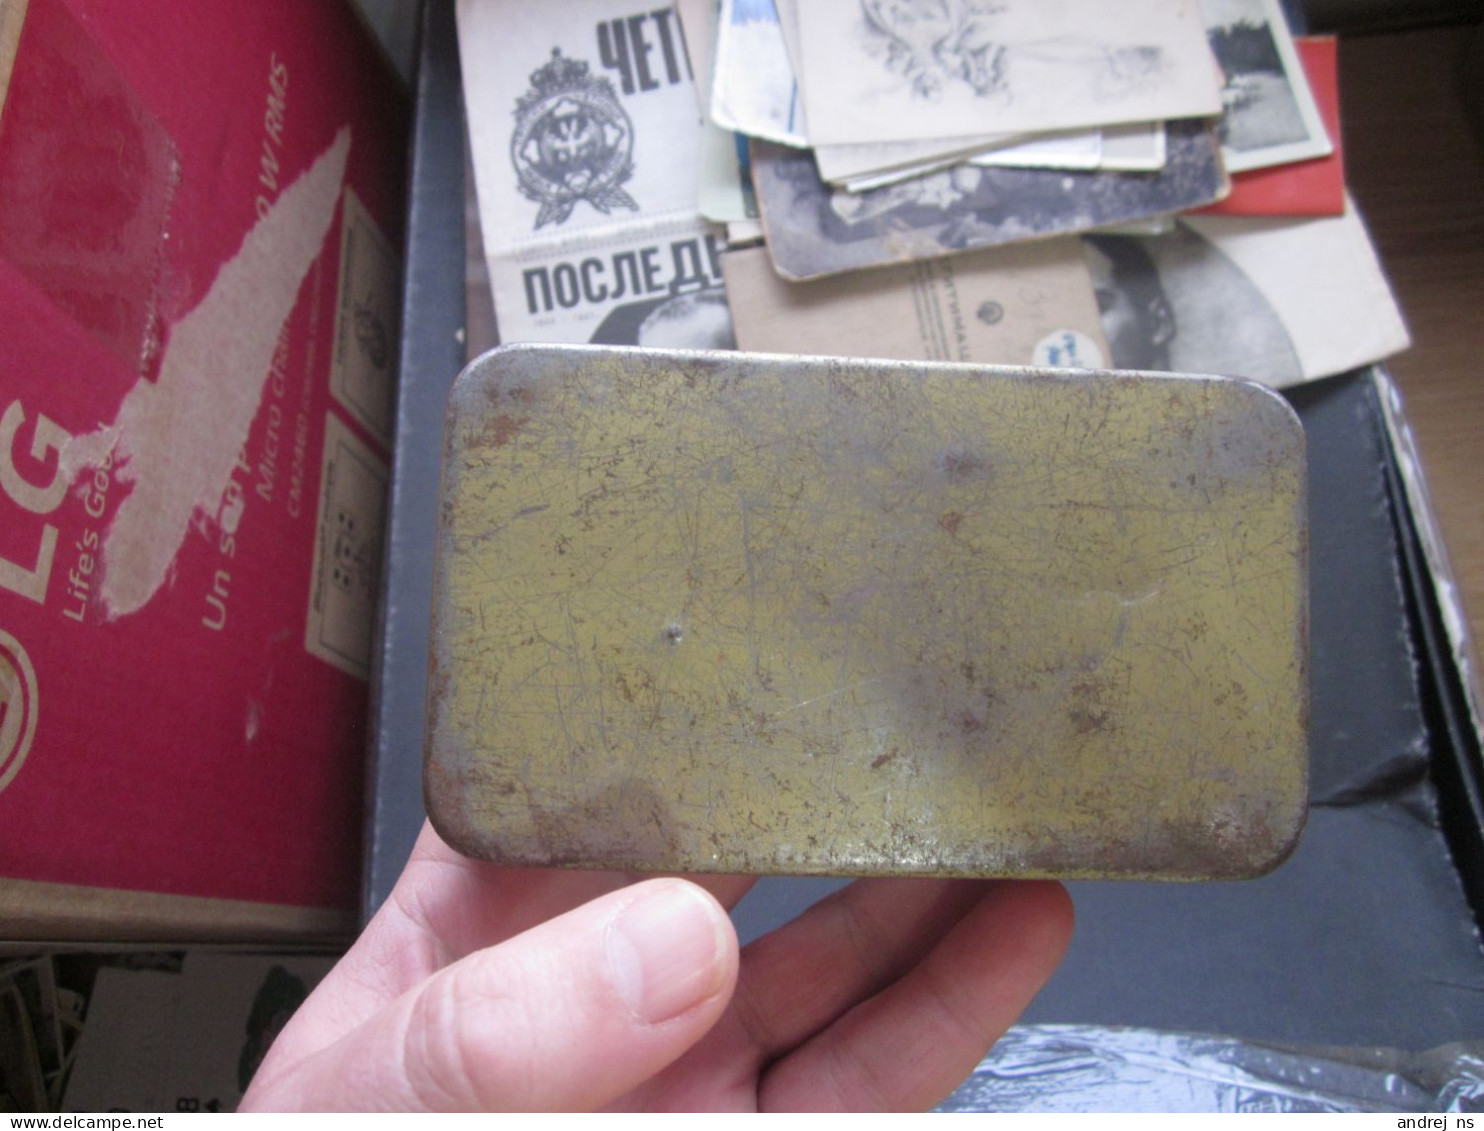 Old Tin Box Orient Duft Leicht Und Mild Tabak 50 Grams - Tabaksdozen (leeg)